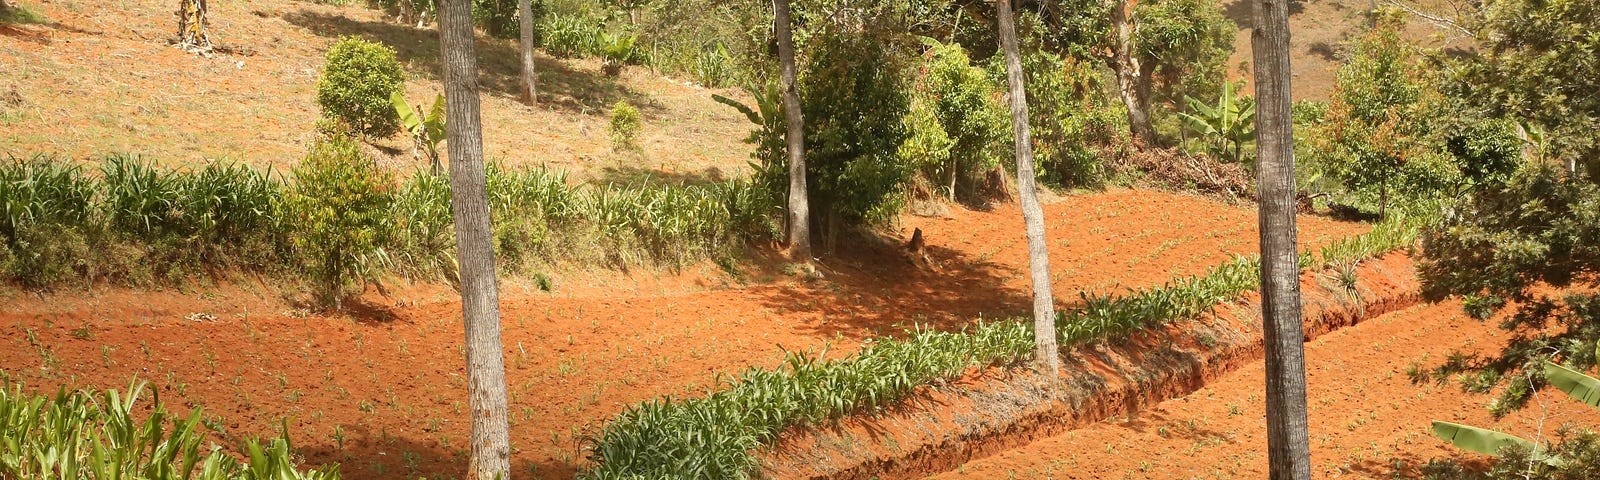 Agricultural landscape in Tanzania